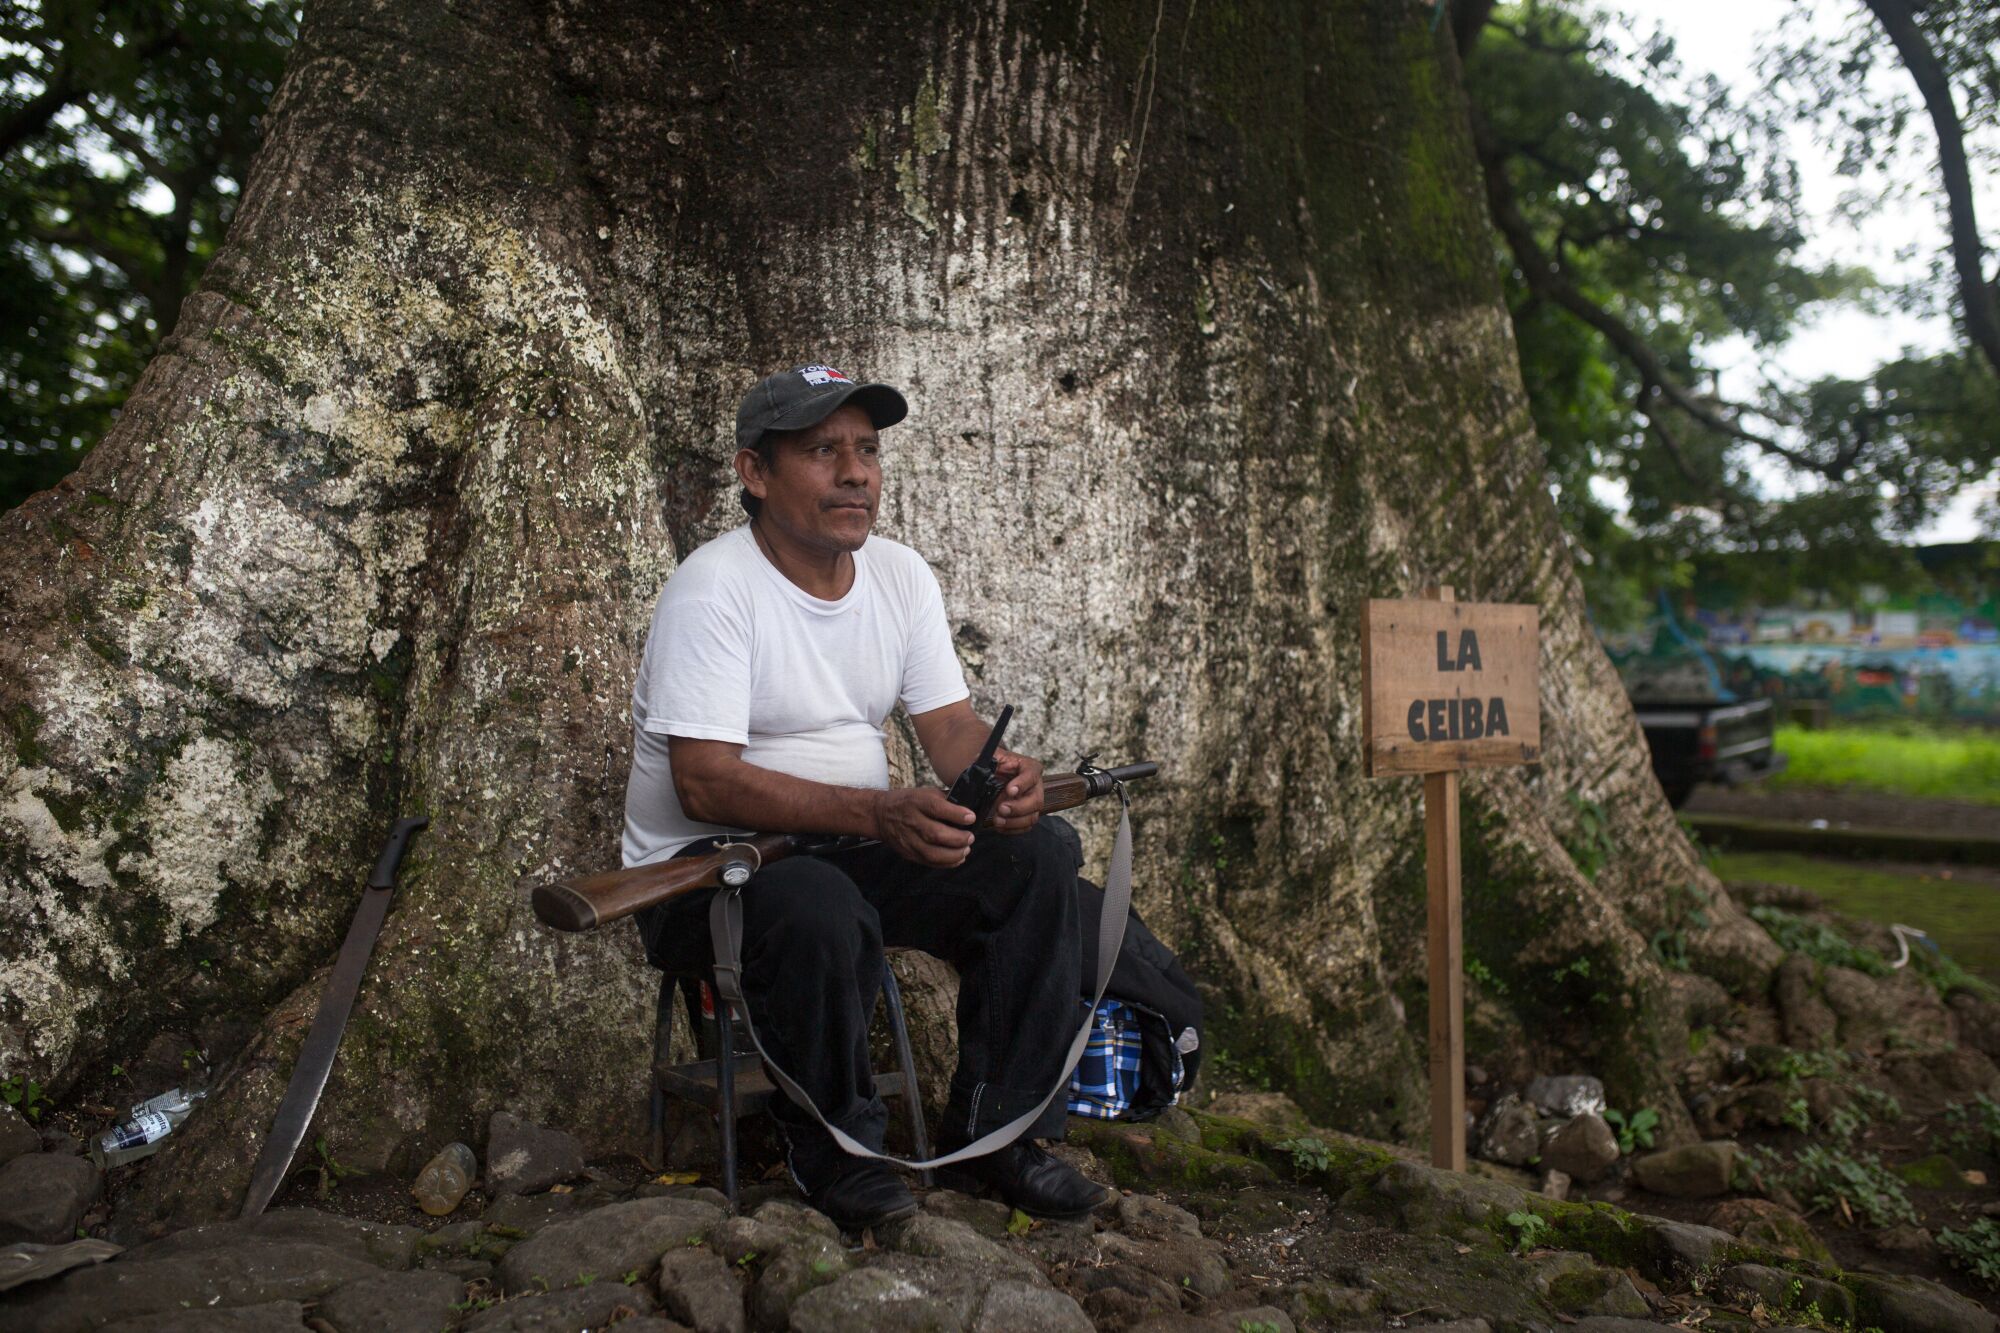 War survivor Bernanrdo Cruz stands guard under the Ceiba tree that serves as the community center in La Trinidad.